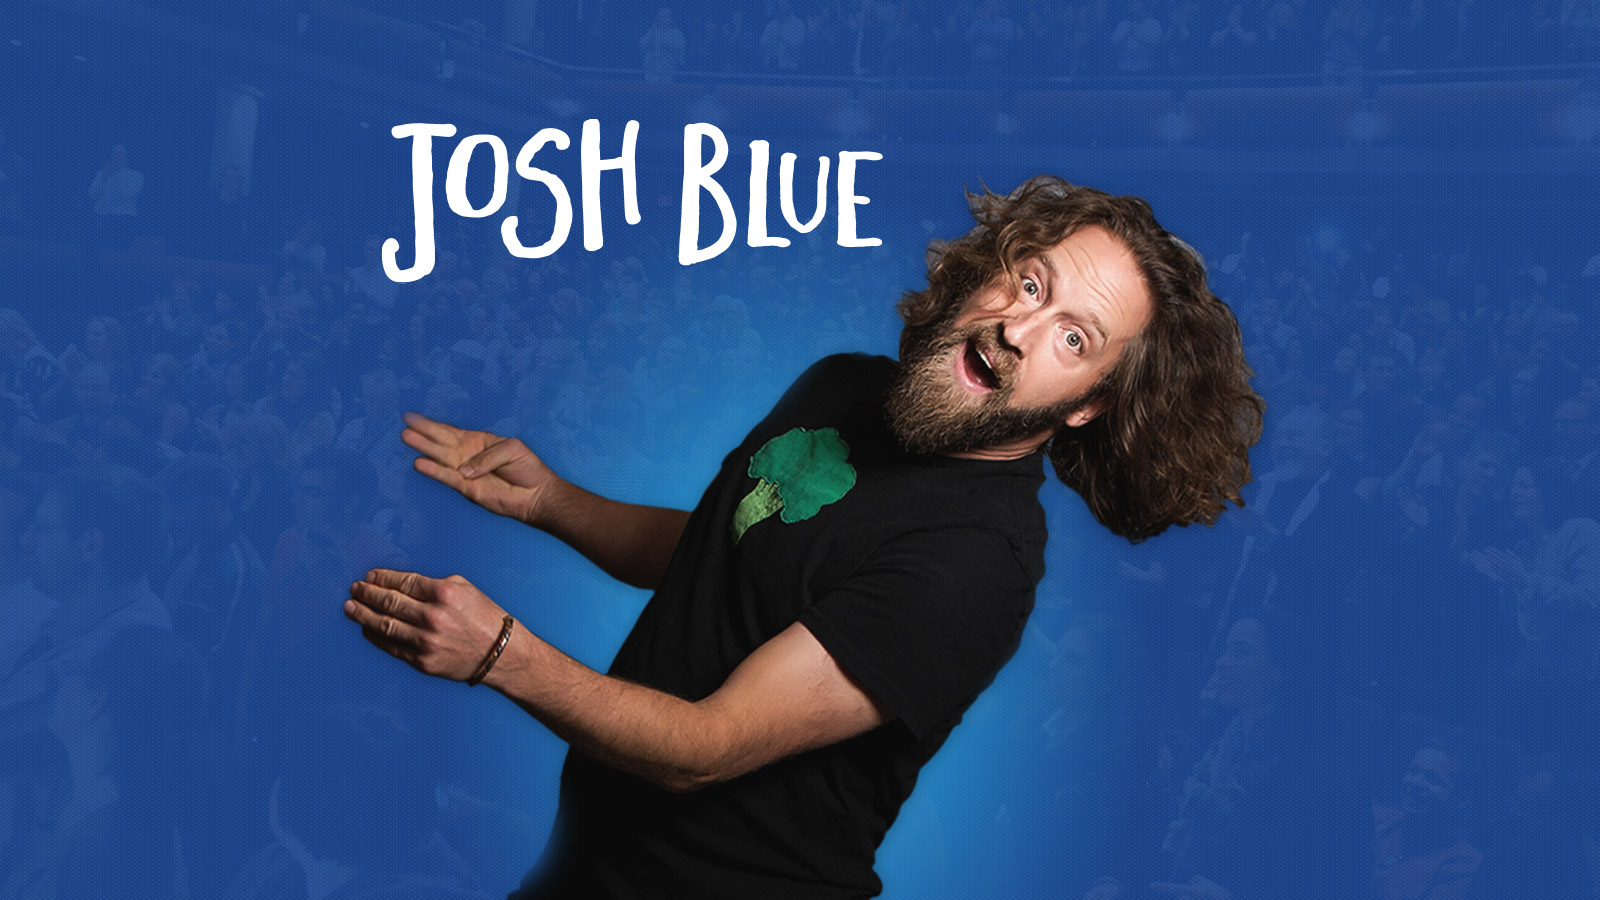 Josh Blue Hire Comedian Josh Blue Summit Comedy, Inc.